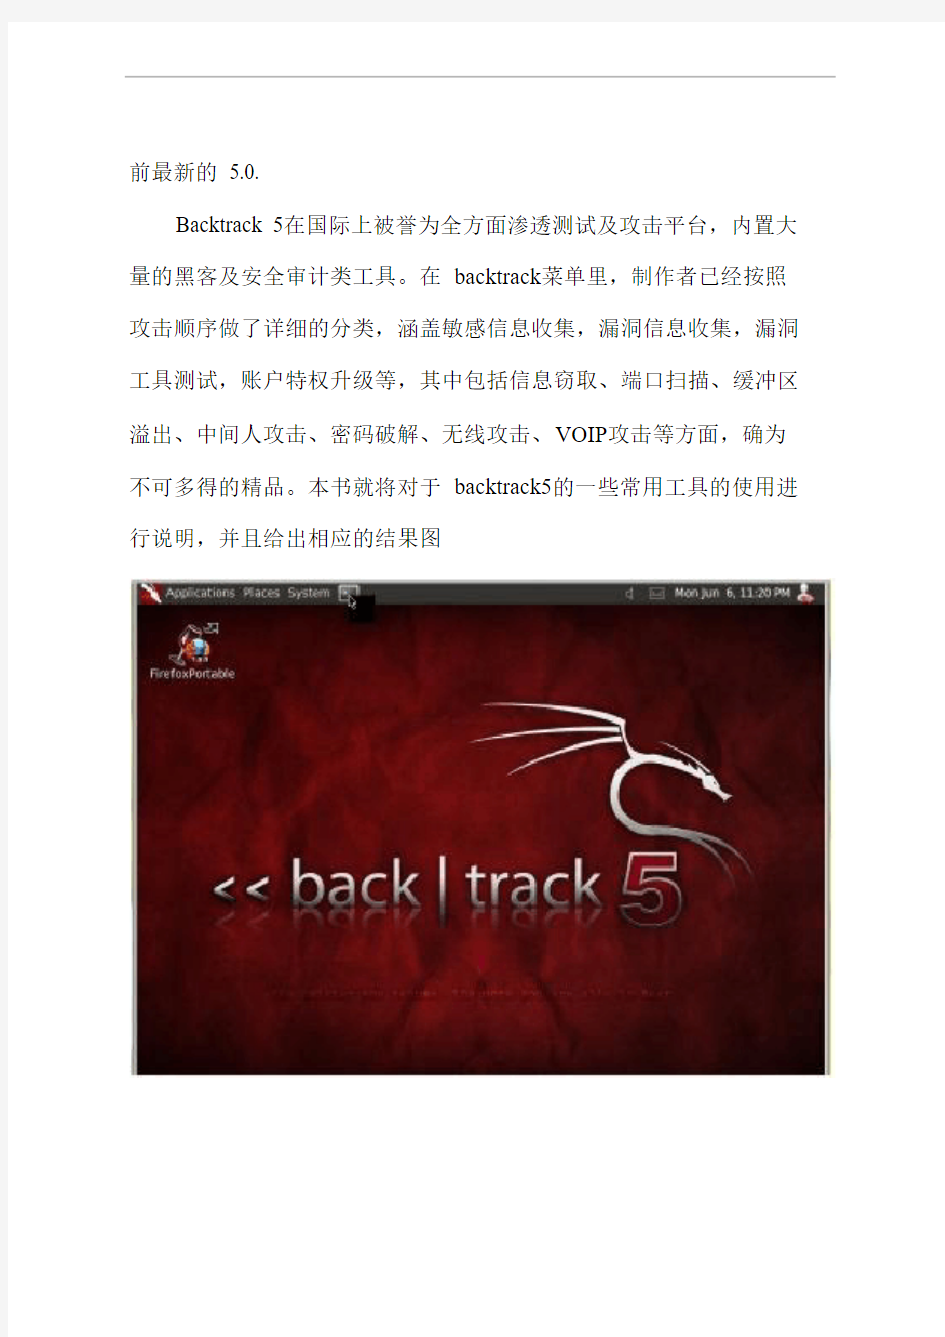 Back_Track_5基础安装手册(免费版)